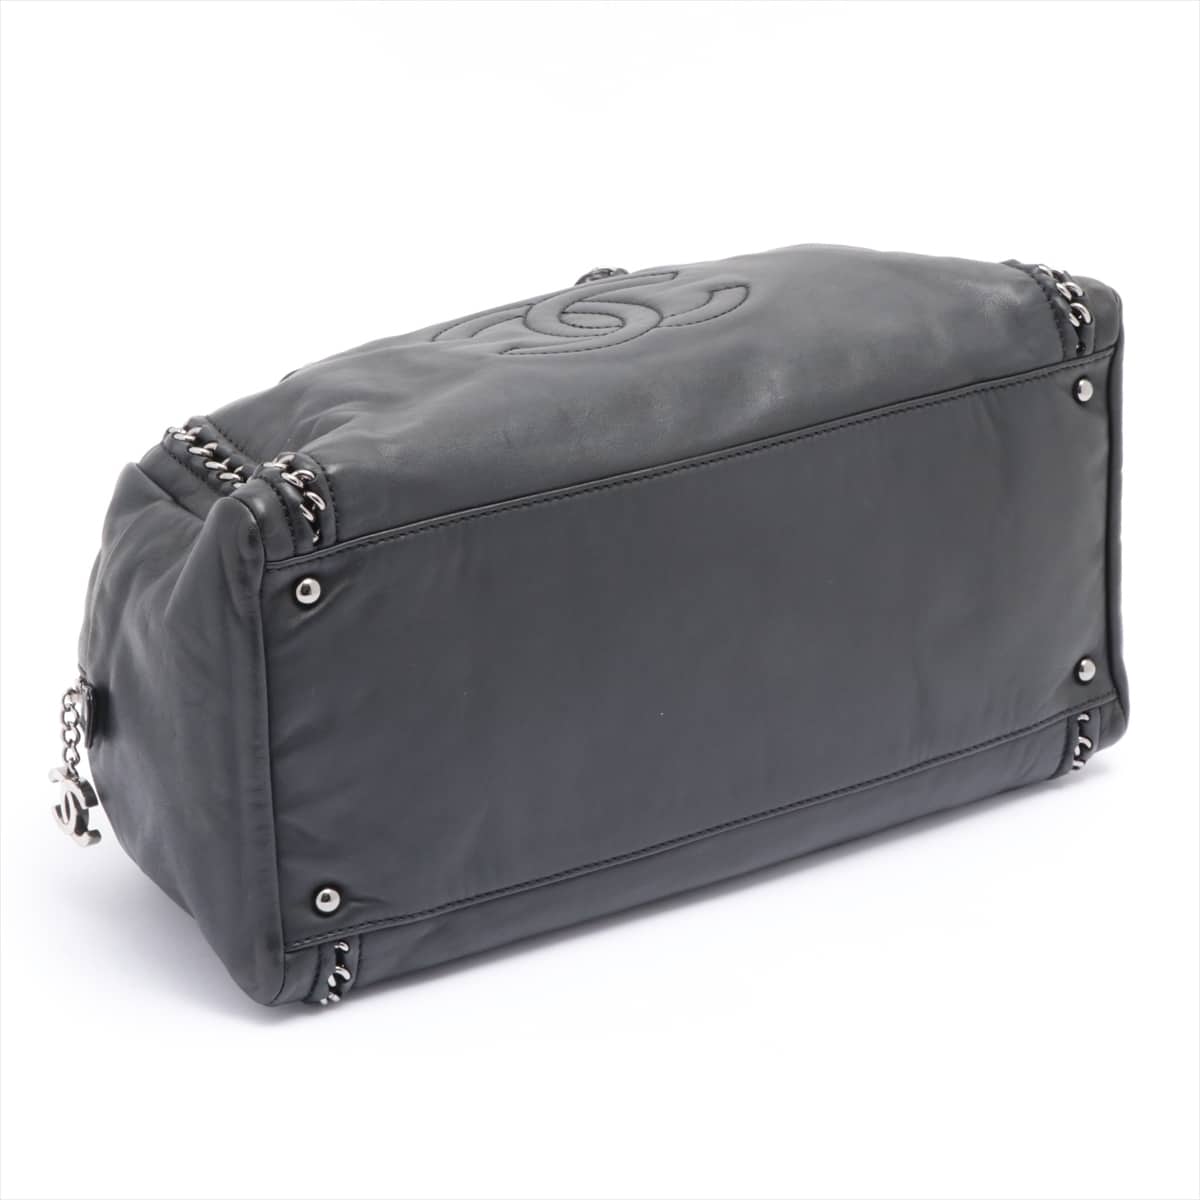 Chanel Luxury Lambskin Chain shoulder bag Black Silver Metal fittings 10XXXXXX